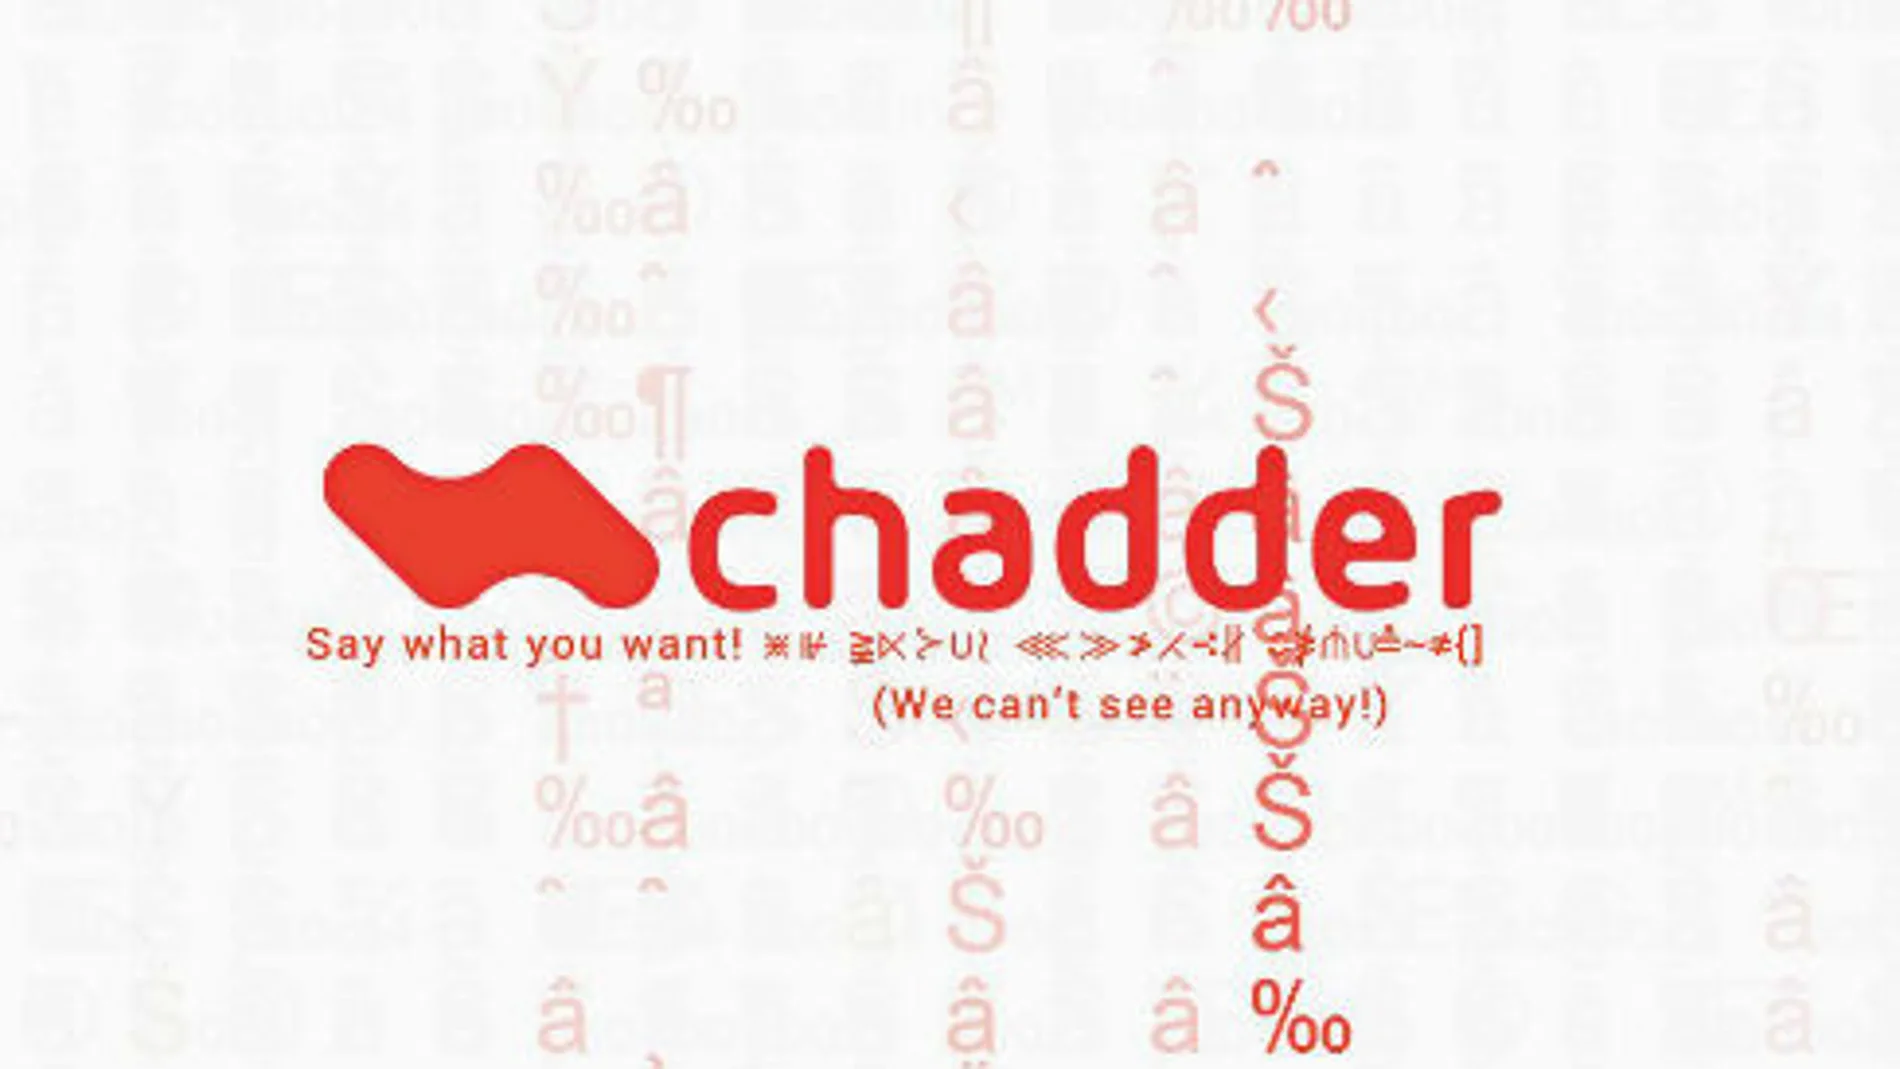 Chadder, la alternativa segura de Jonh McAfee a WhatsApp